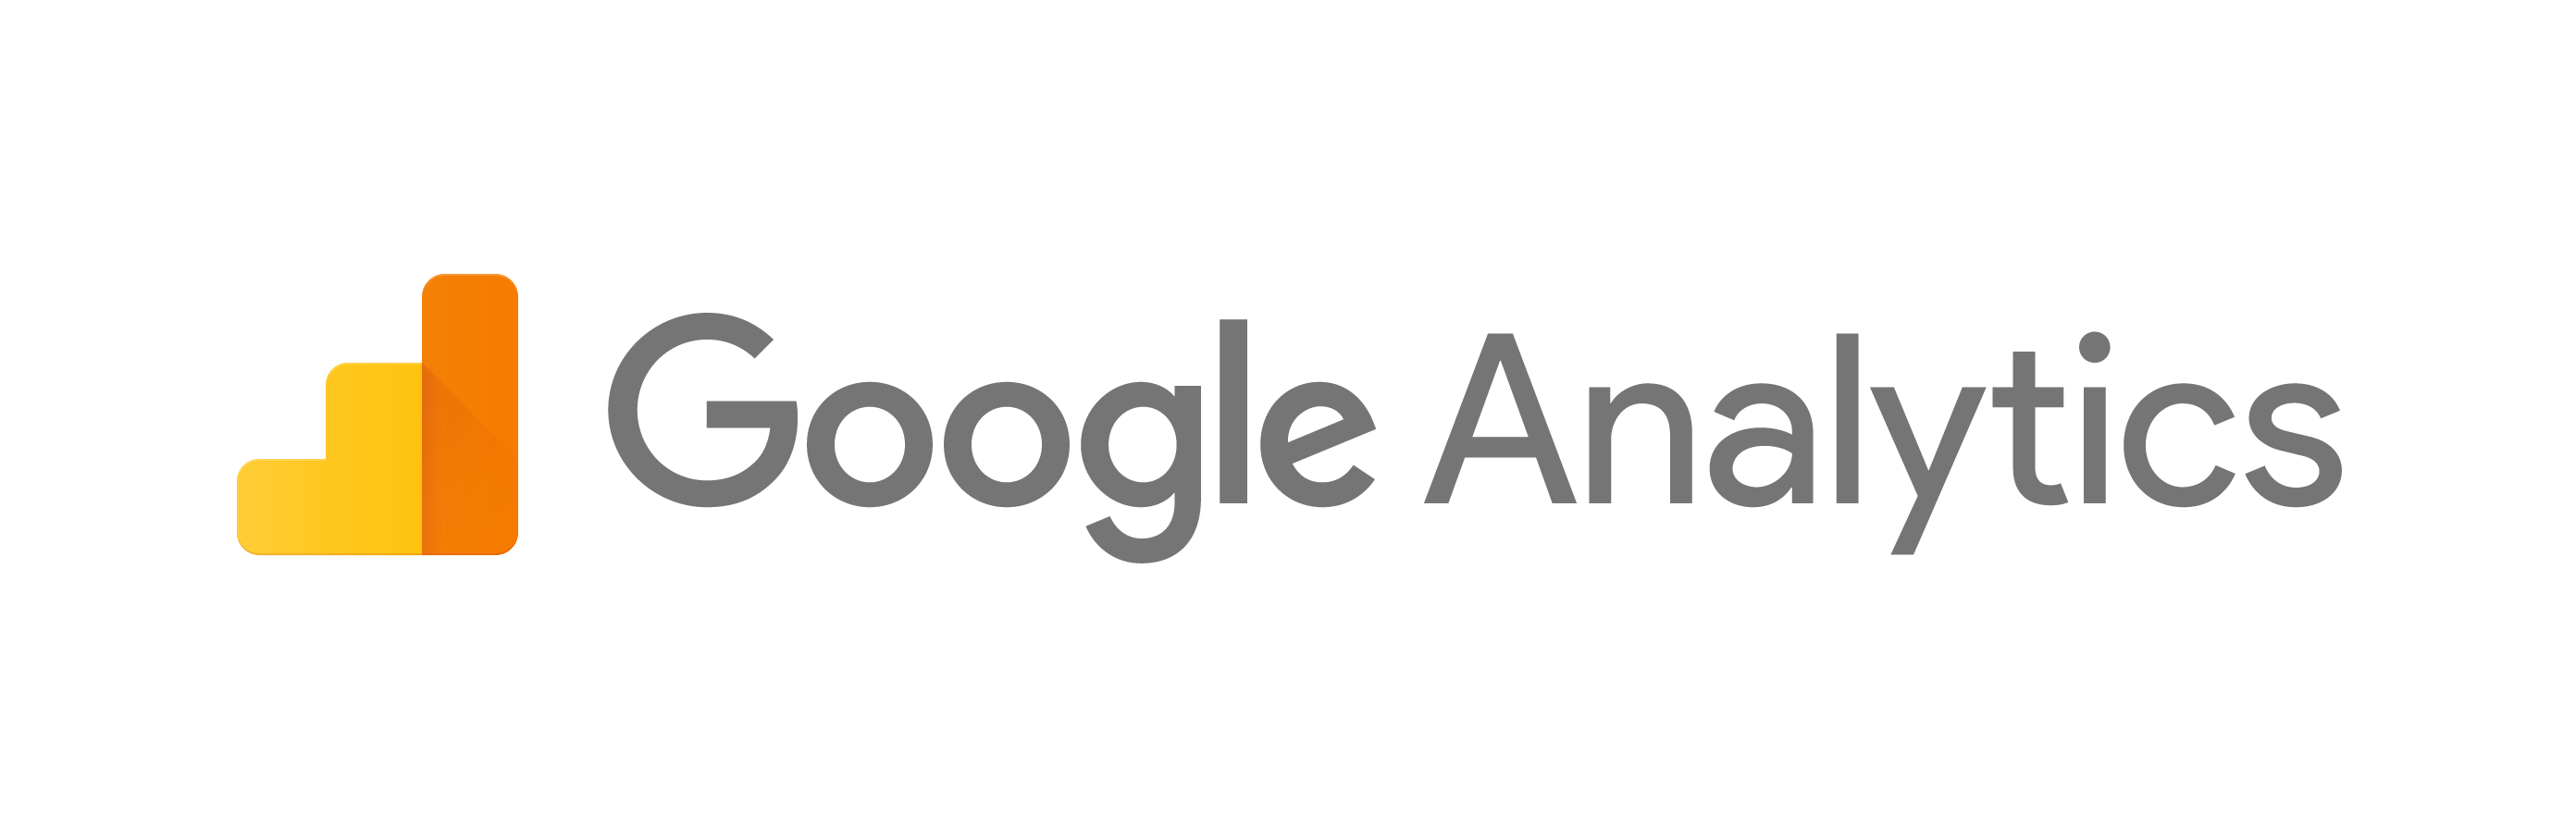 business tools - google analytics